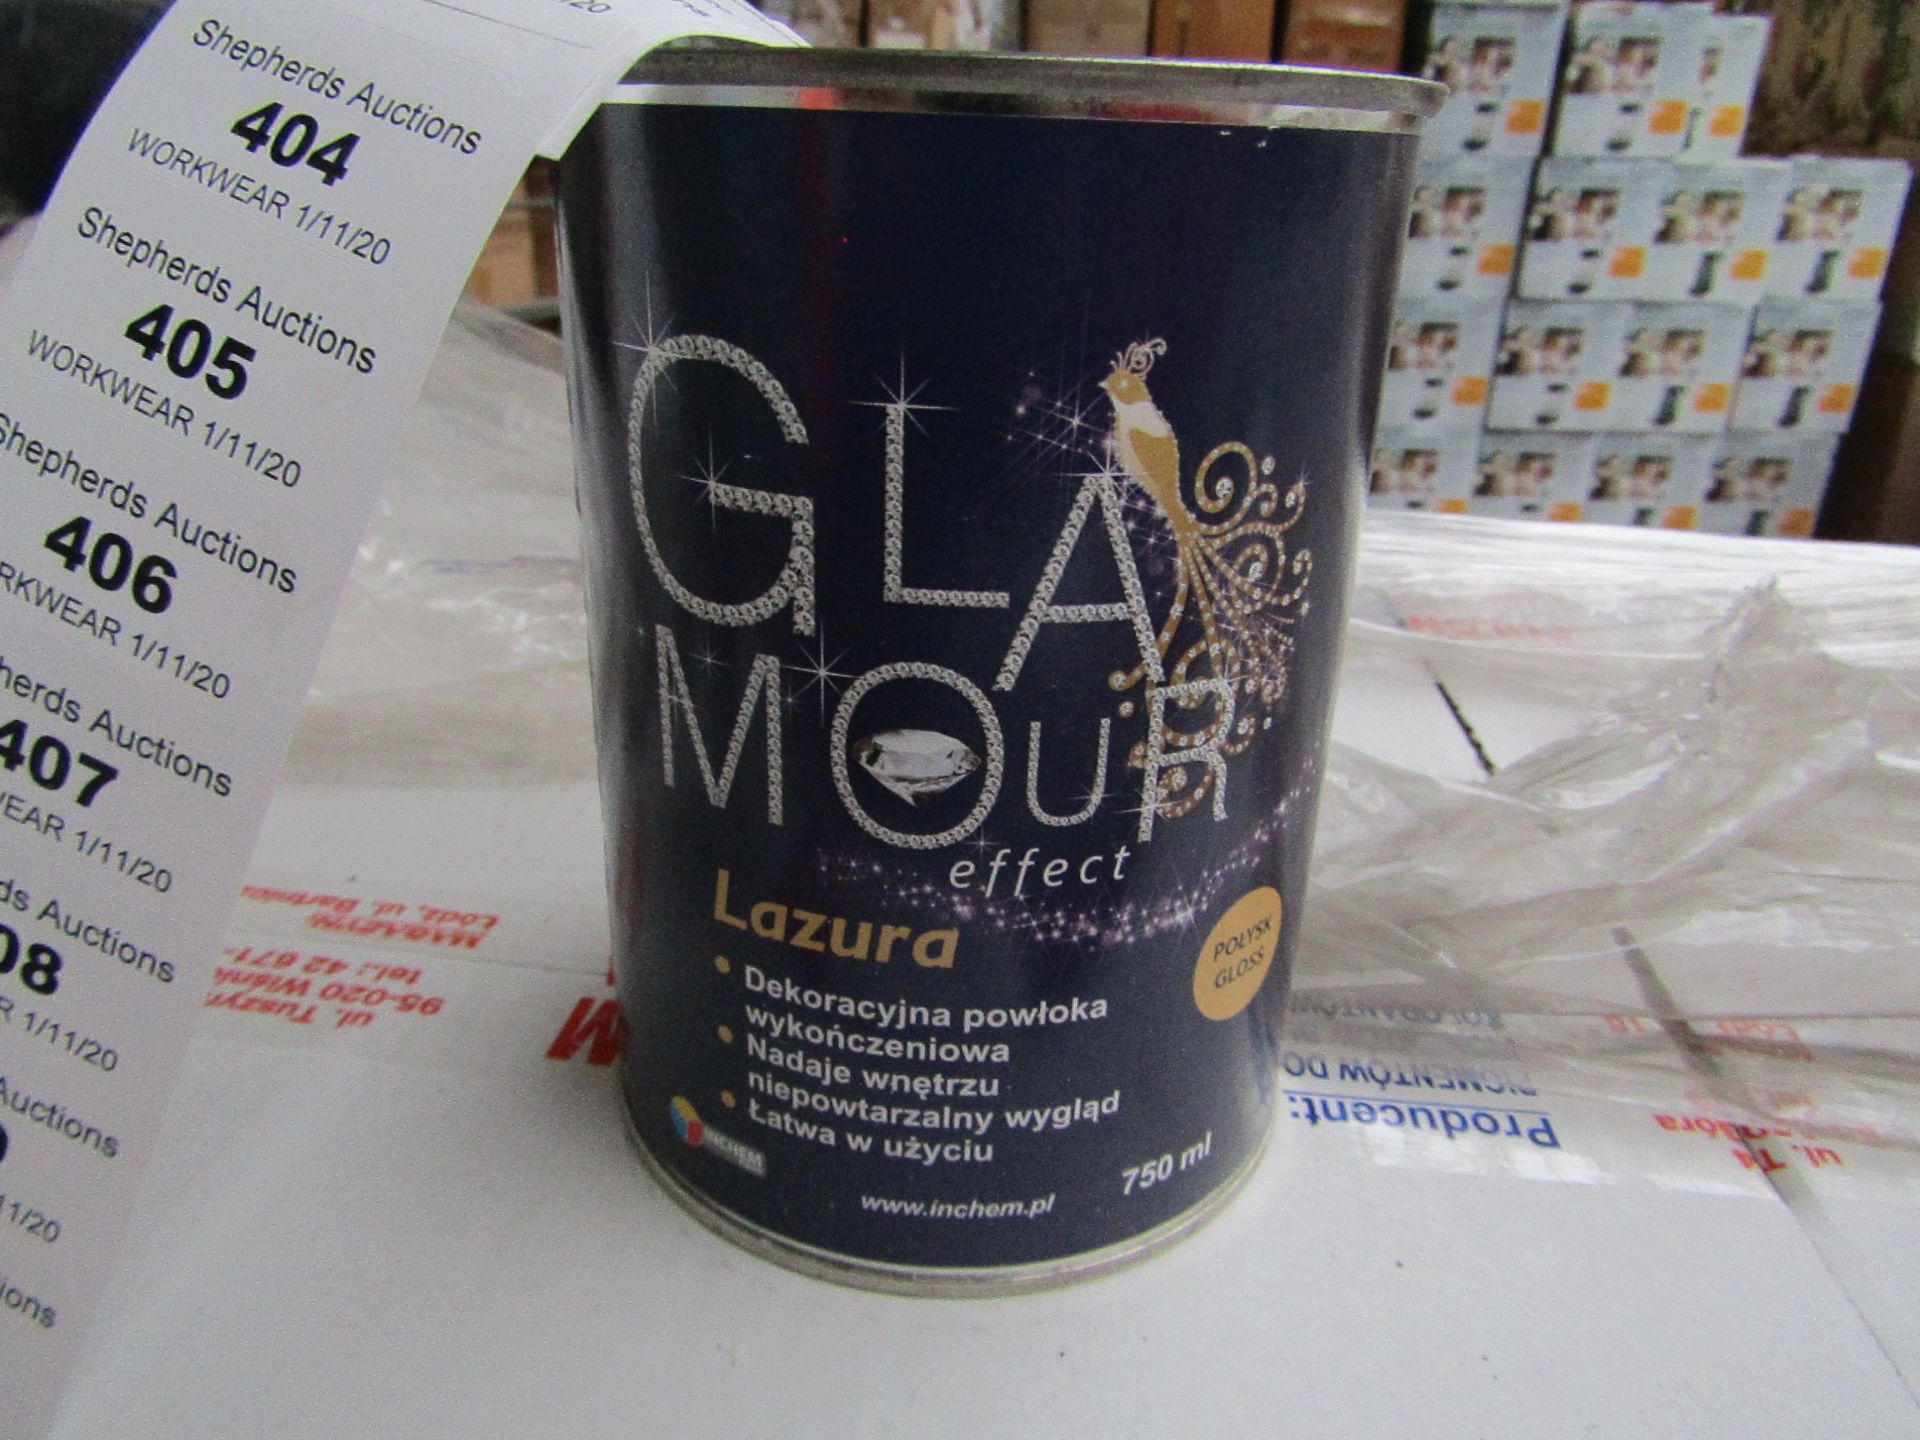 6x Glamour - Lazura Glossy Glaze Paint (750ml) - All New & Sealed.